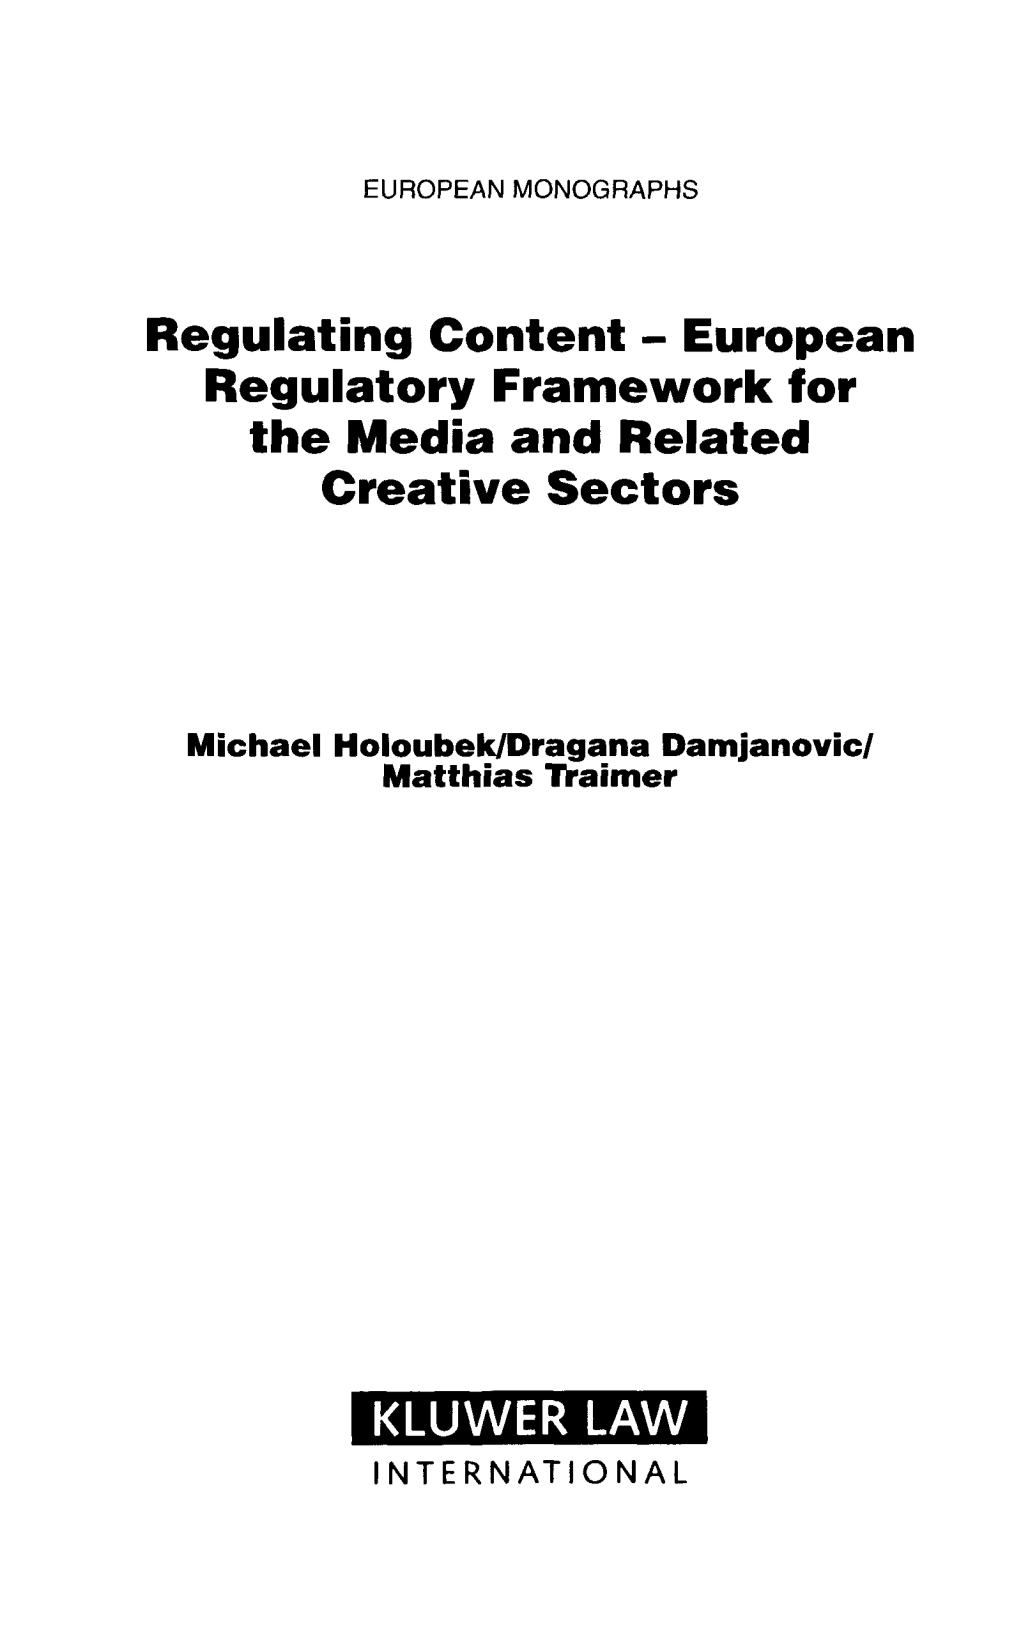 European Regulatory Framework for Thè Media and Related Creative Sectors